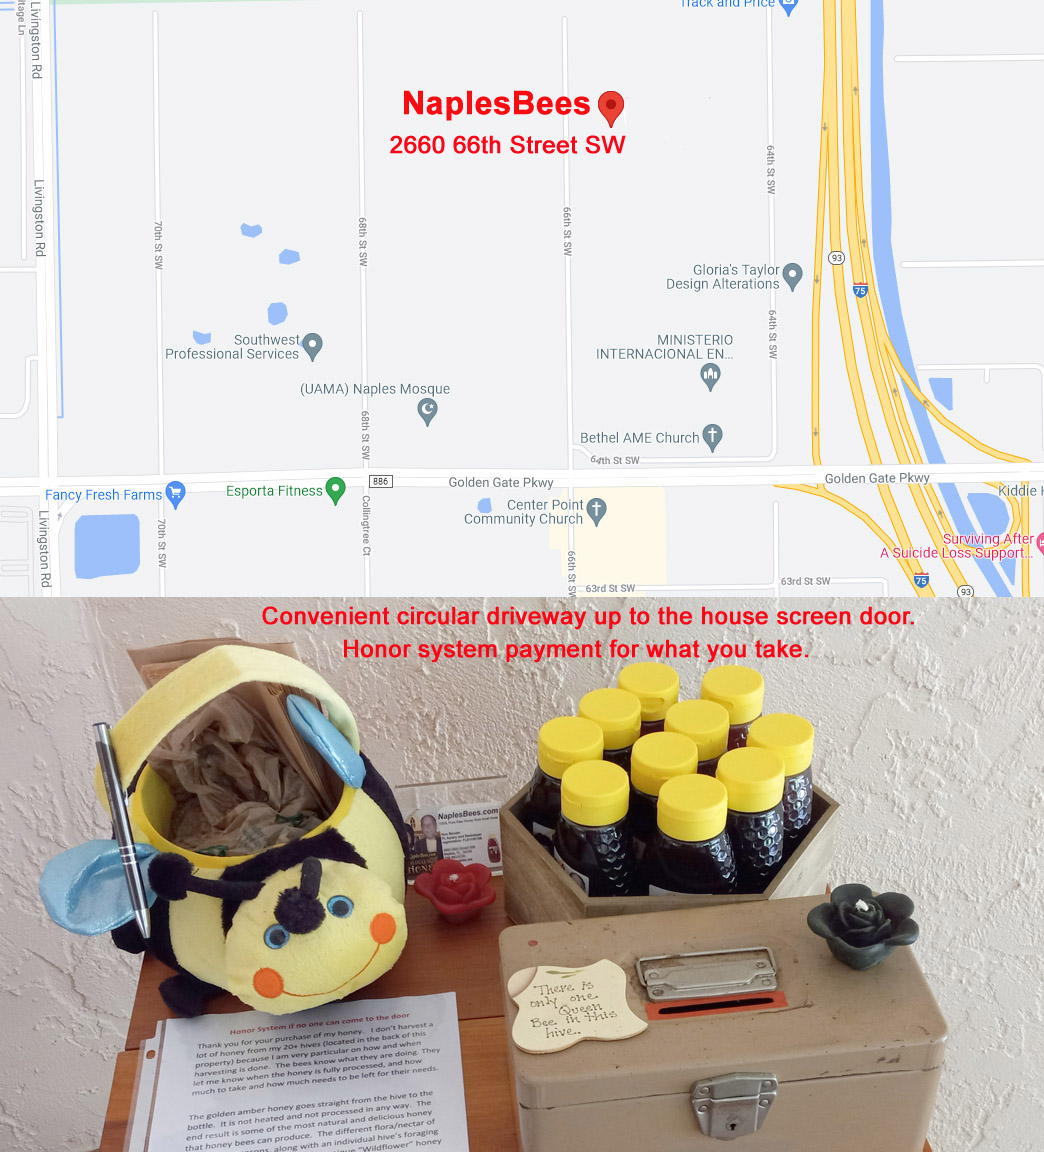 NaplesBees honey table location